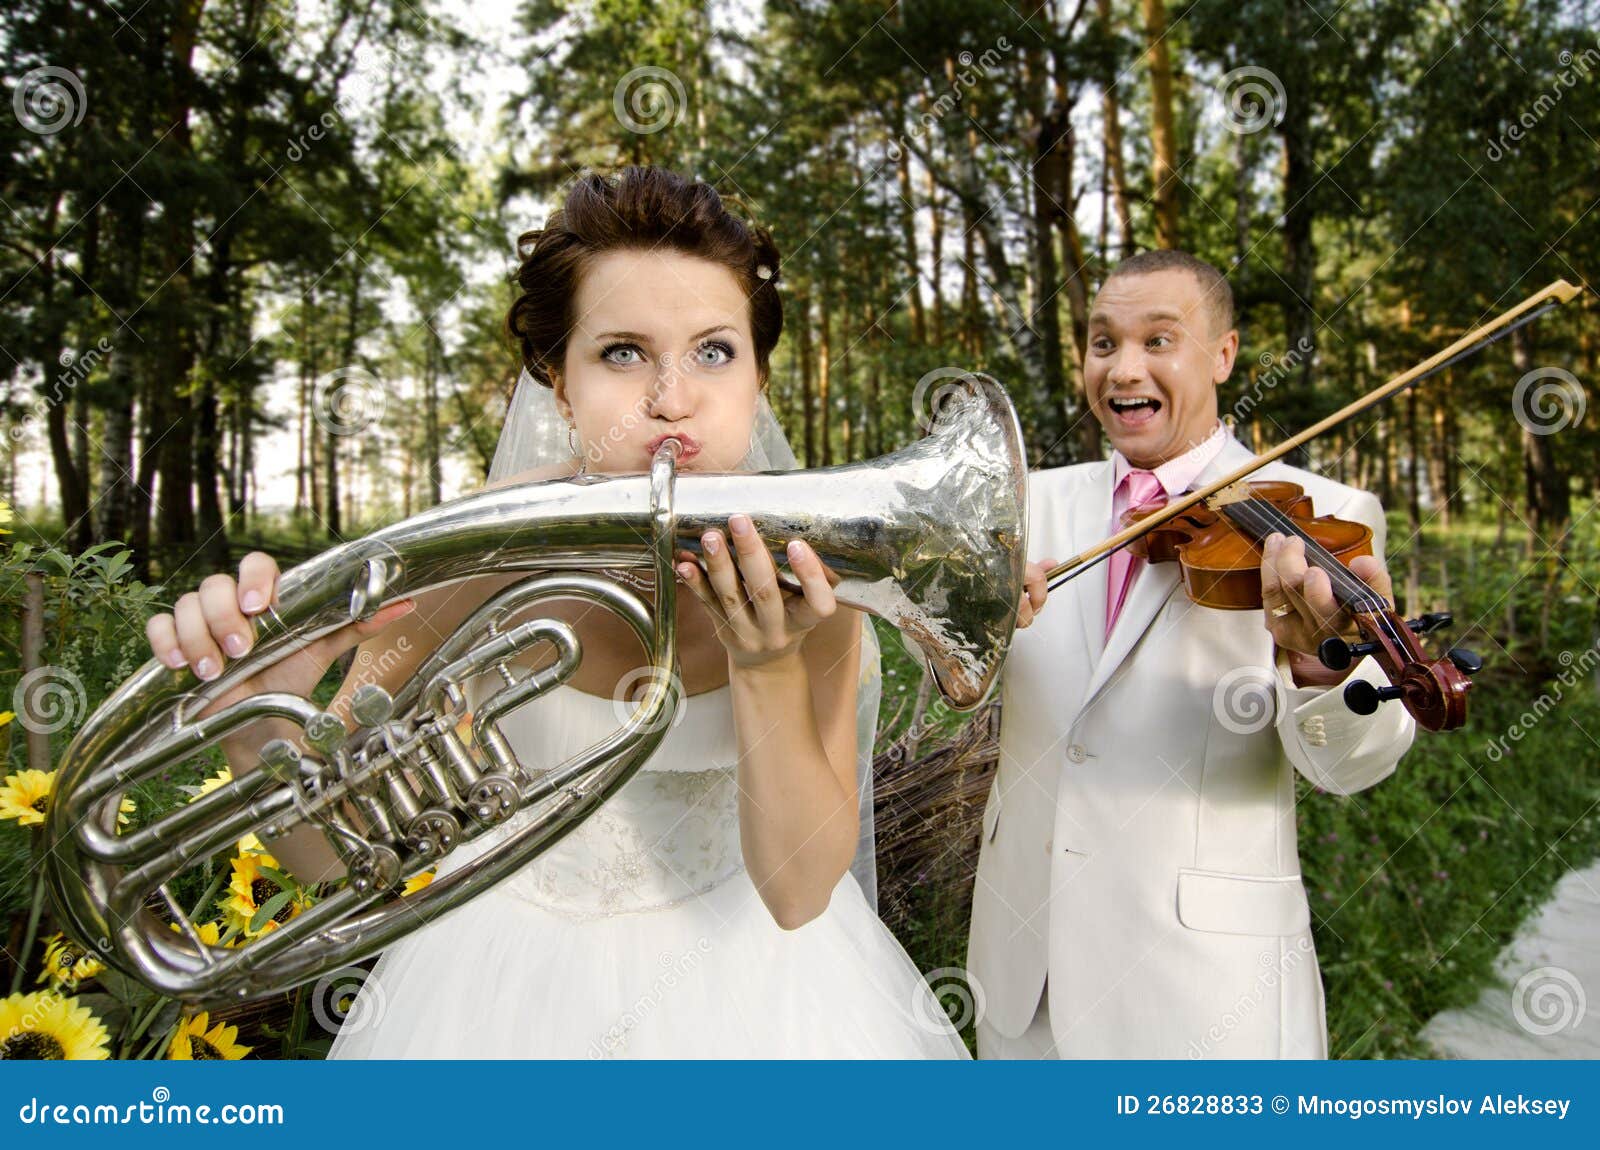 Fiancee blow the trumpet, bridegroom play on violin, wedding humour photo